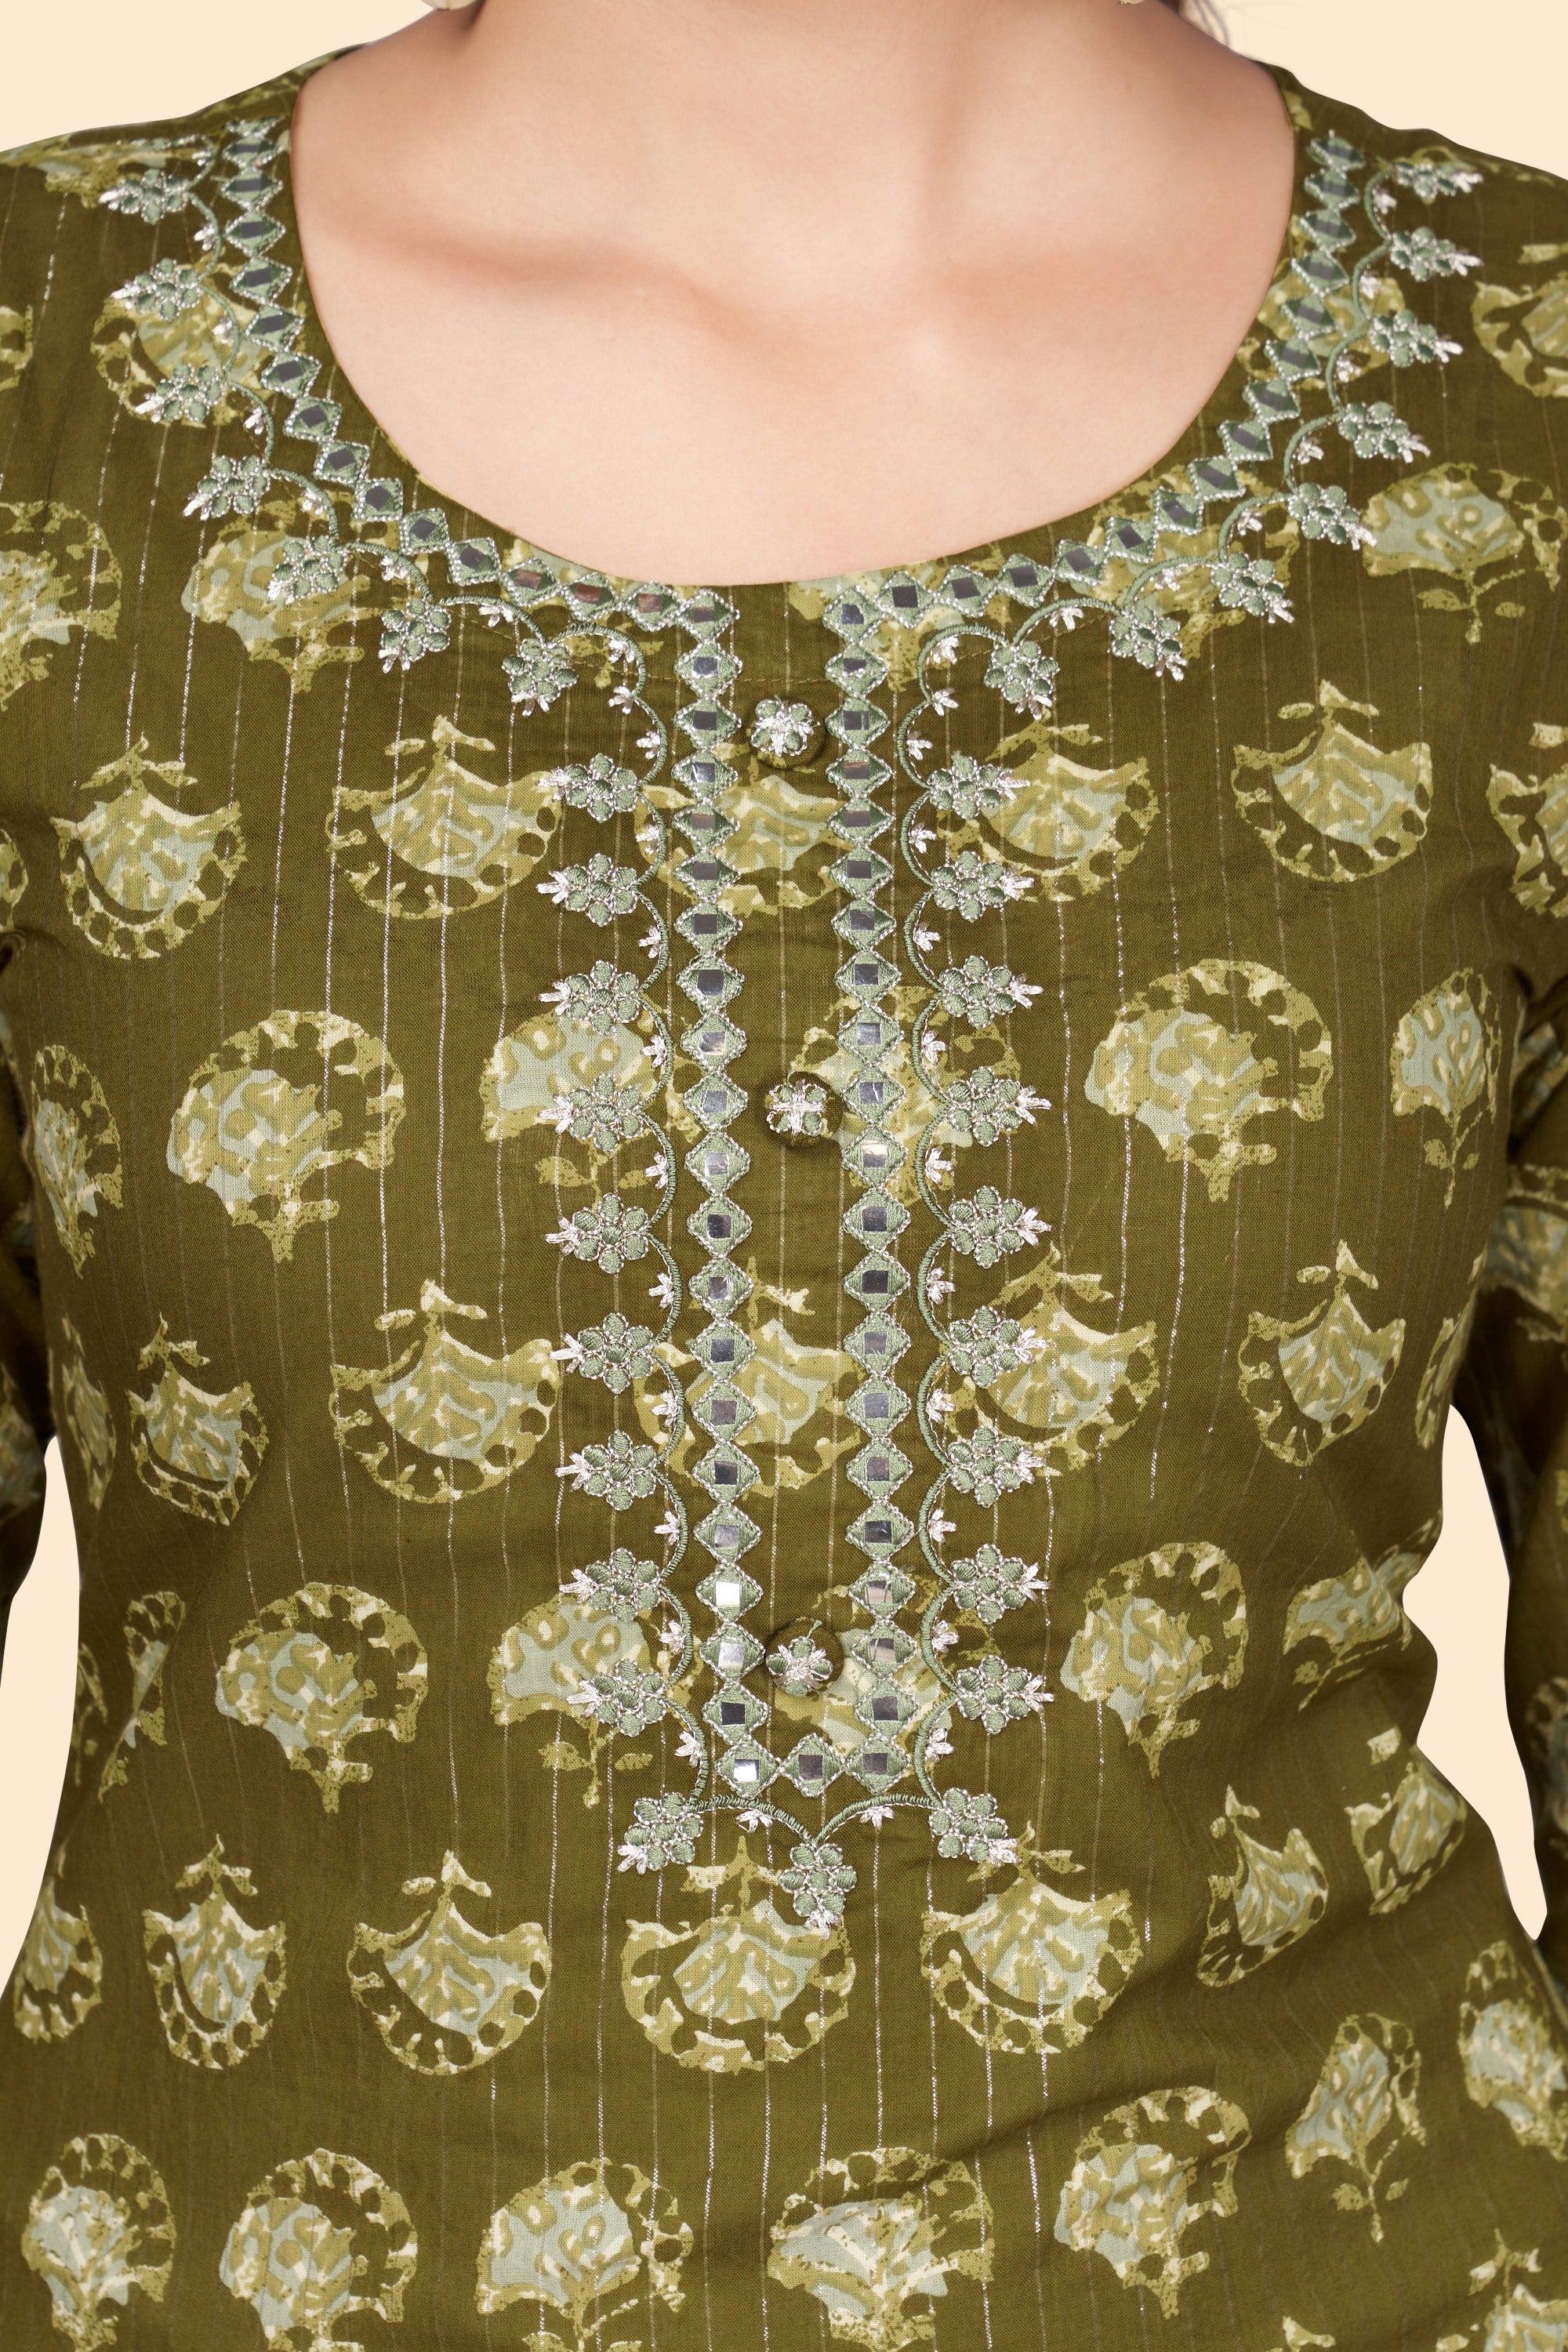 Women's Print & Embroidered Straight Cotton Mahendi Green Stitched Kurta - Vbuyz